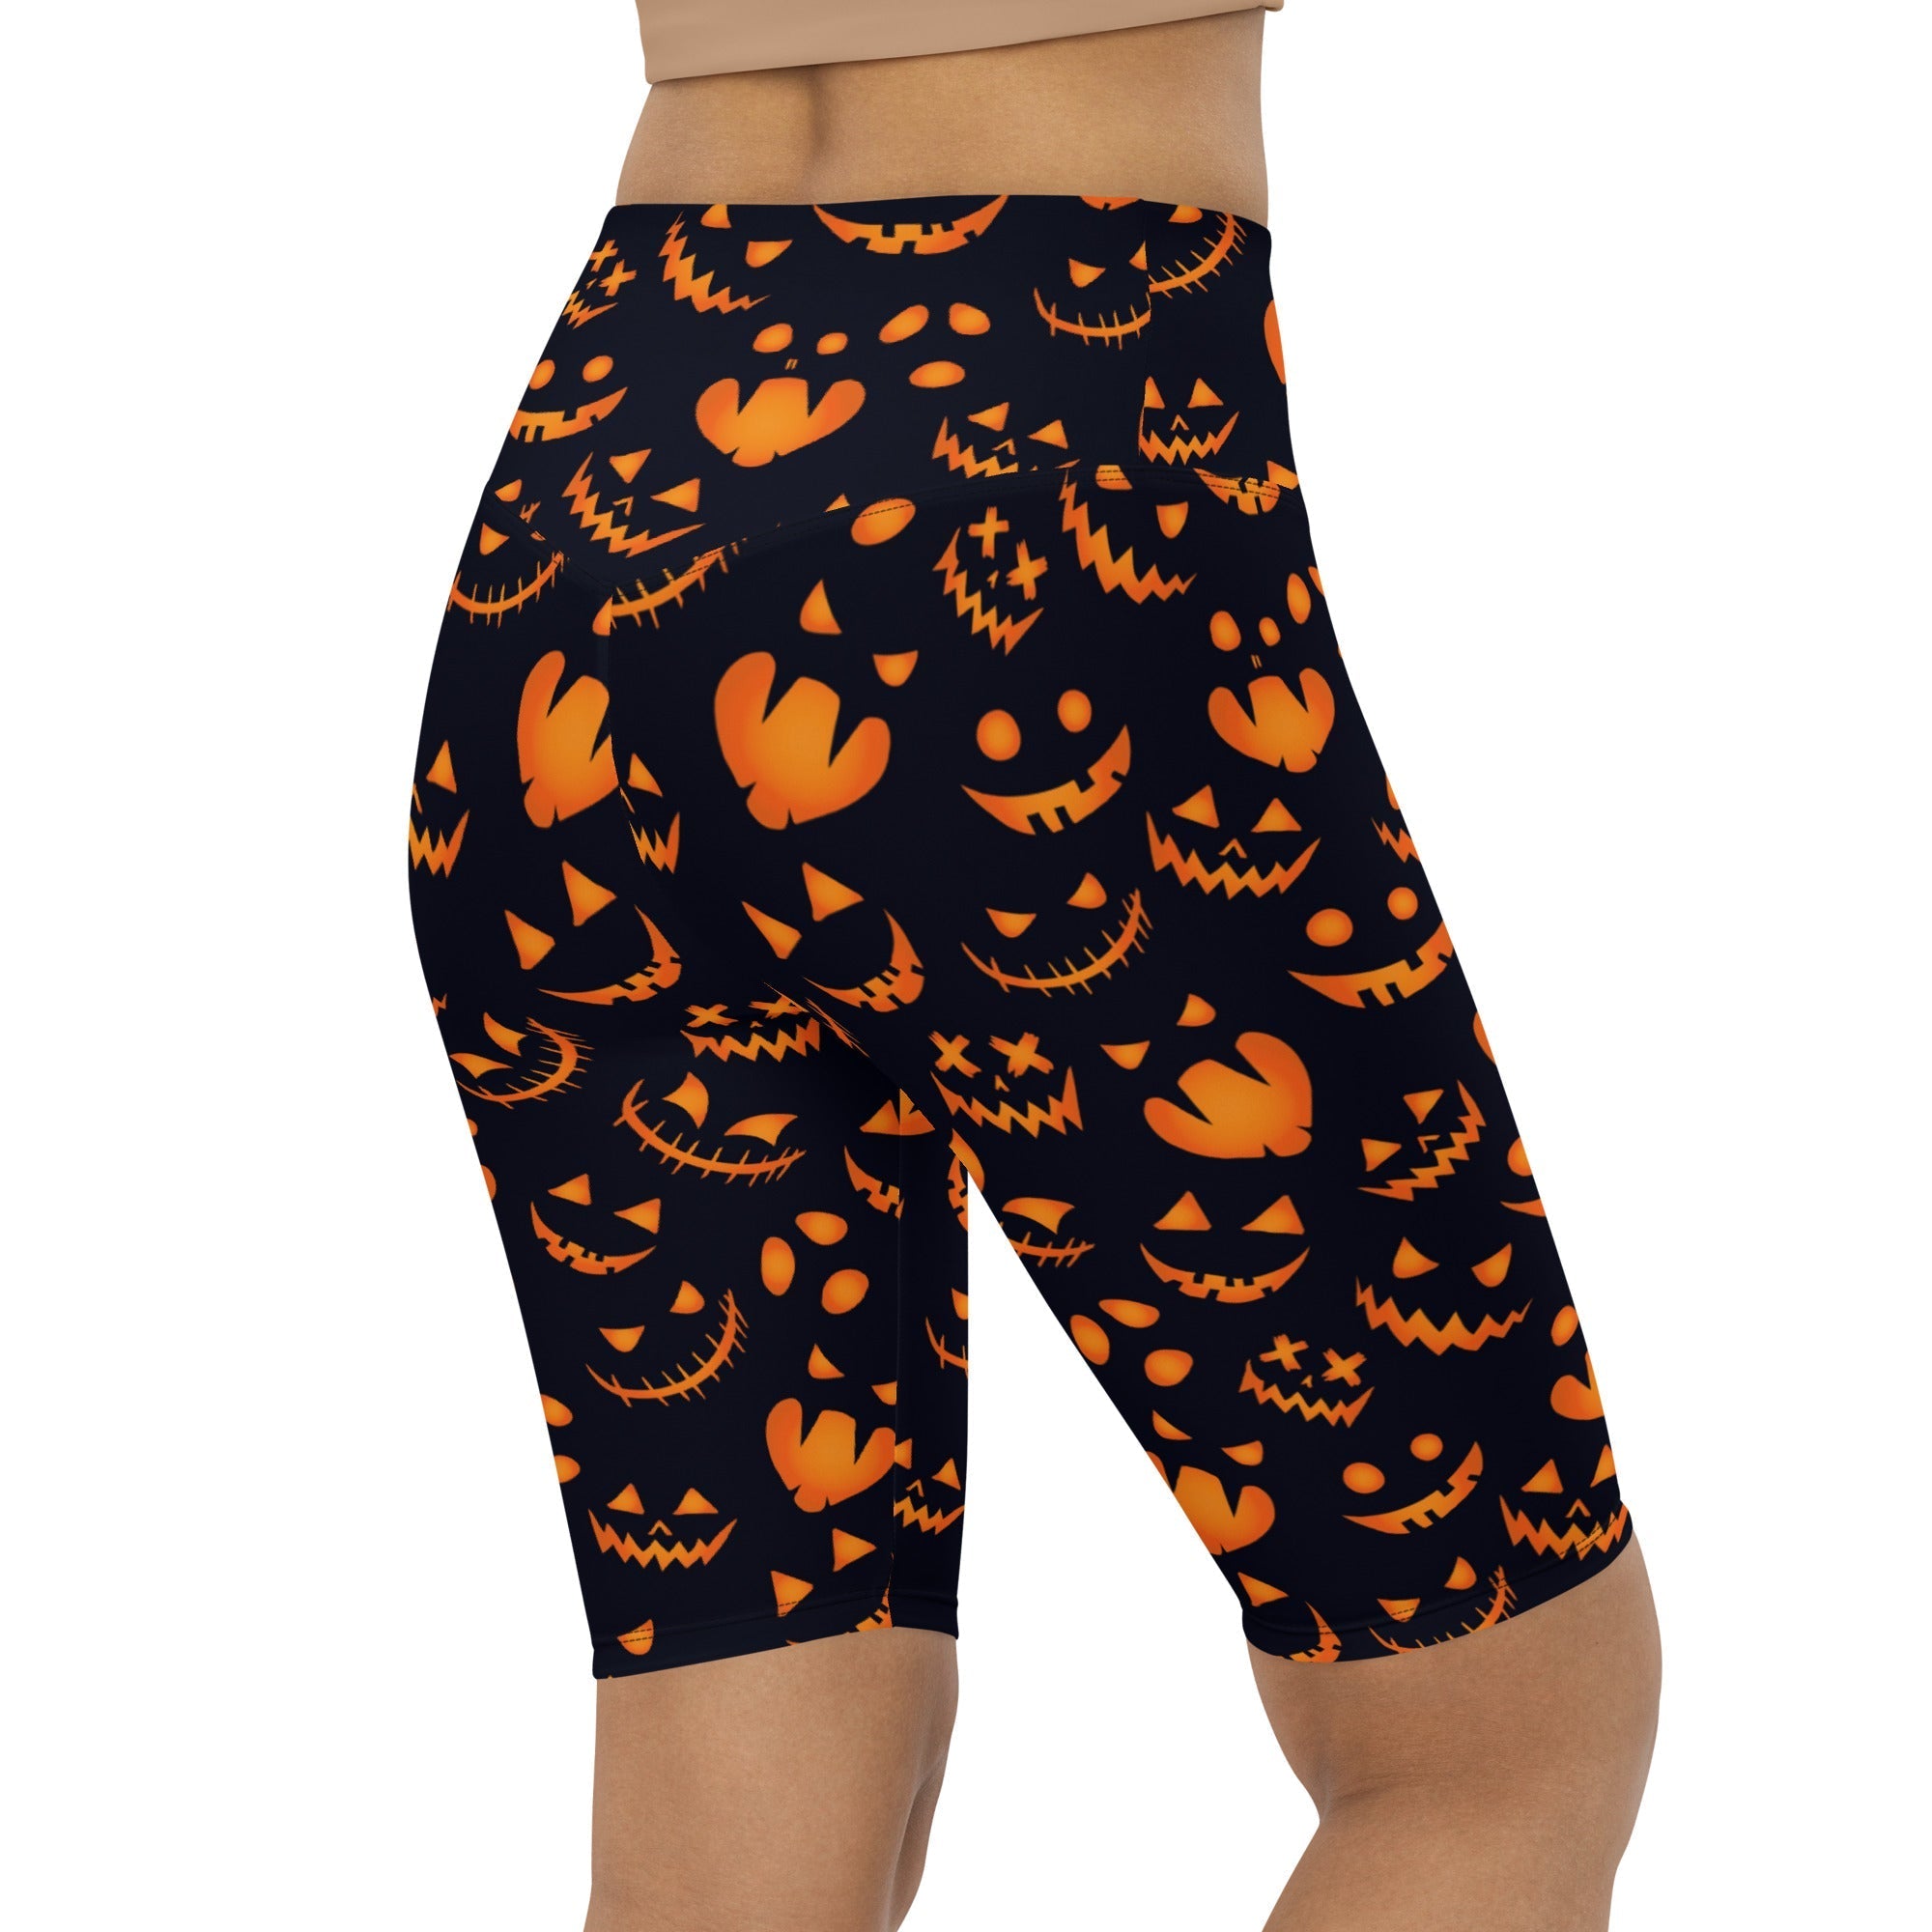 Spooktacular Halloween Biker Shorts